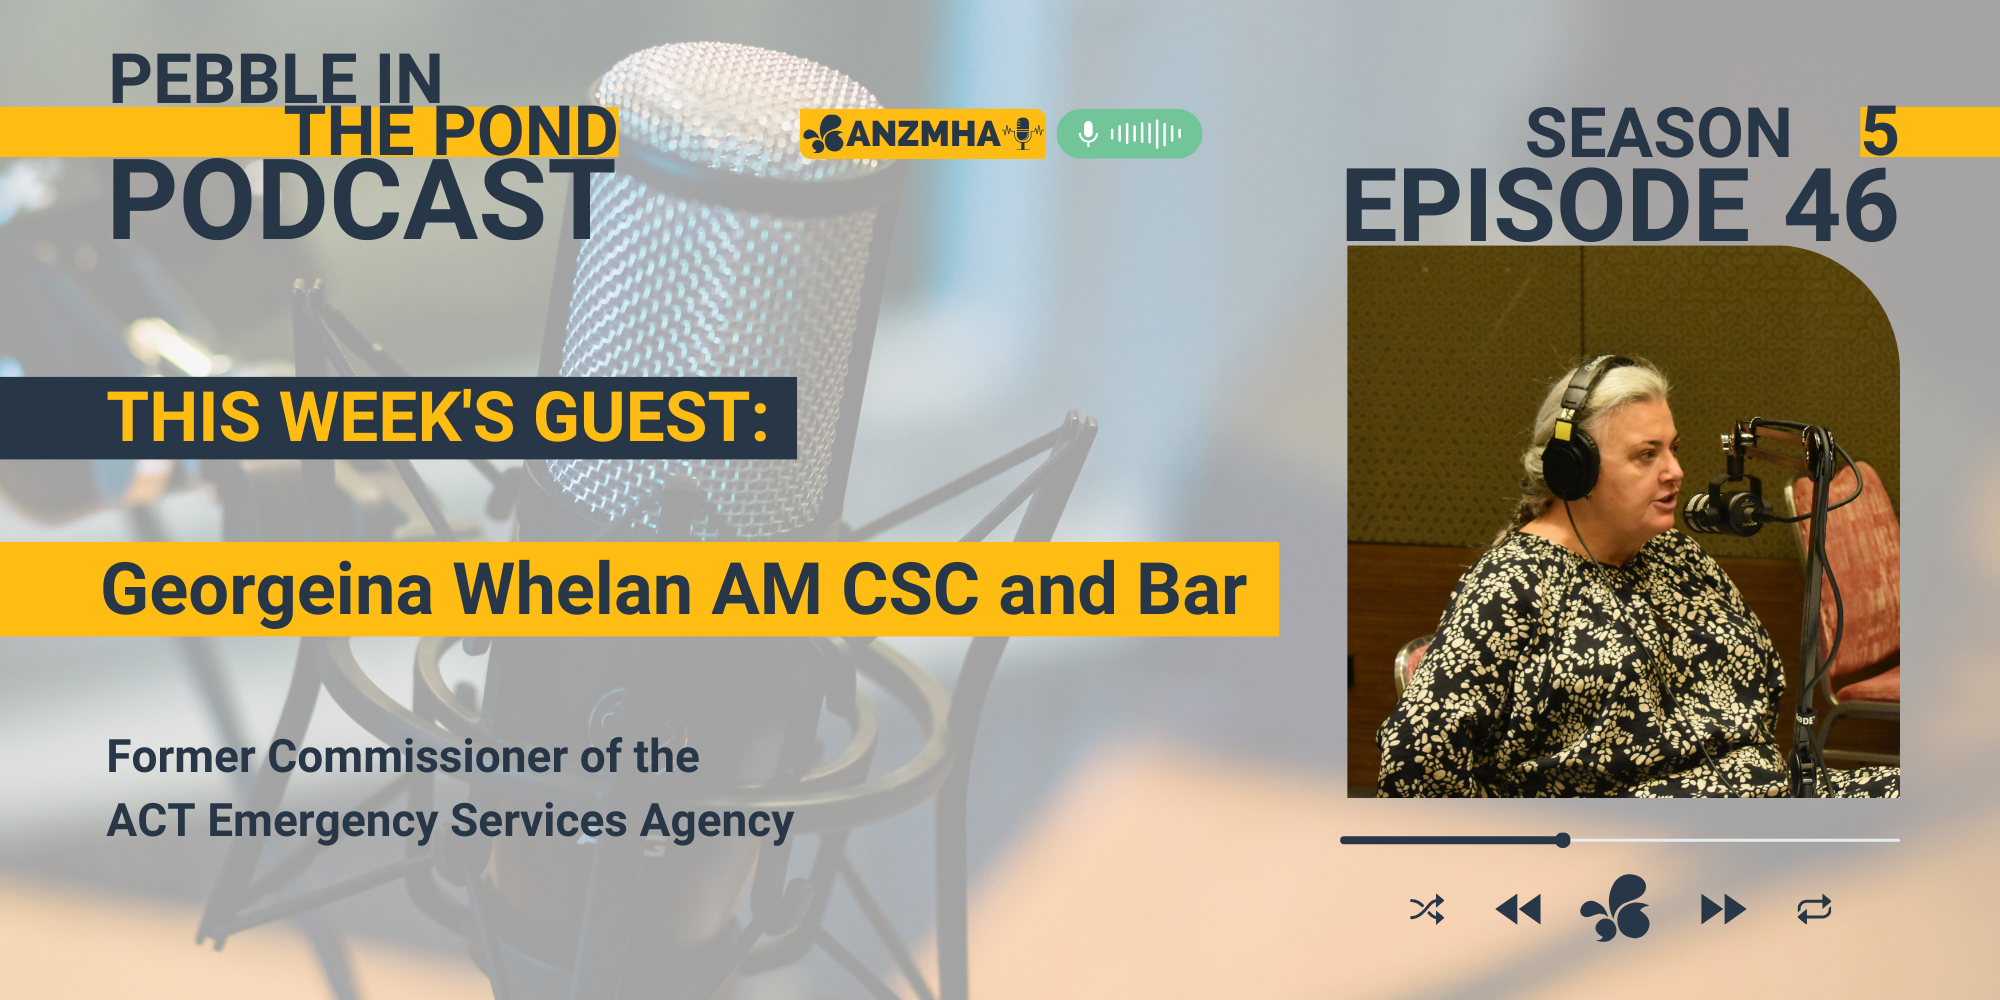 ANZMHA Podcast: Georgeina Whelan AM CSC and Bar